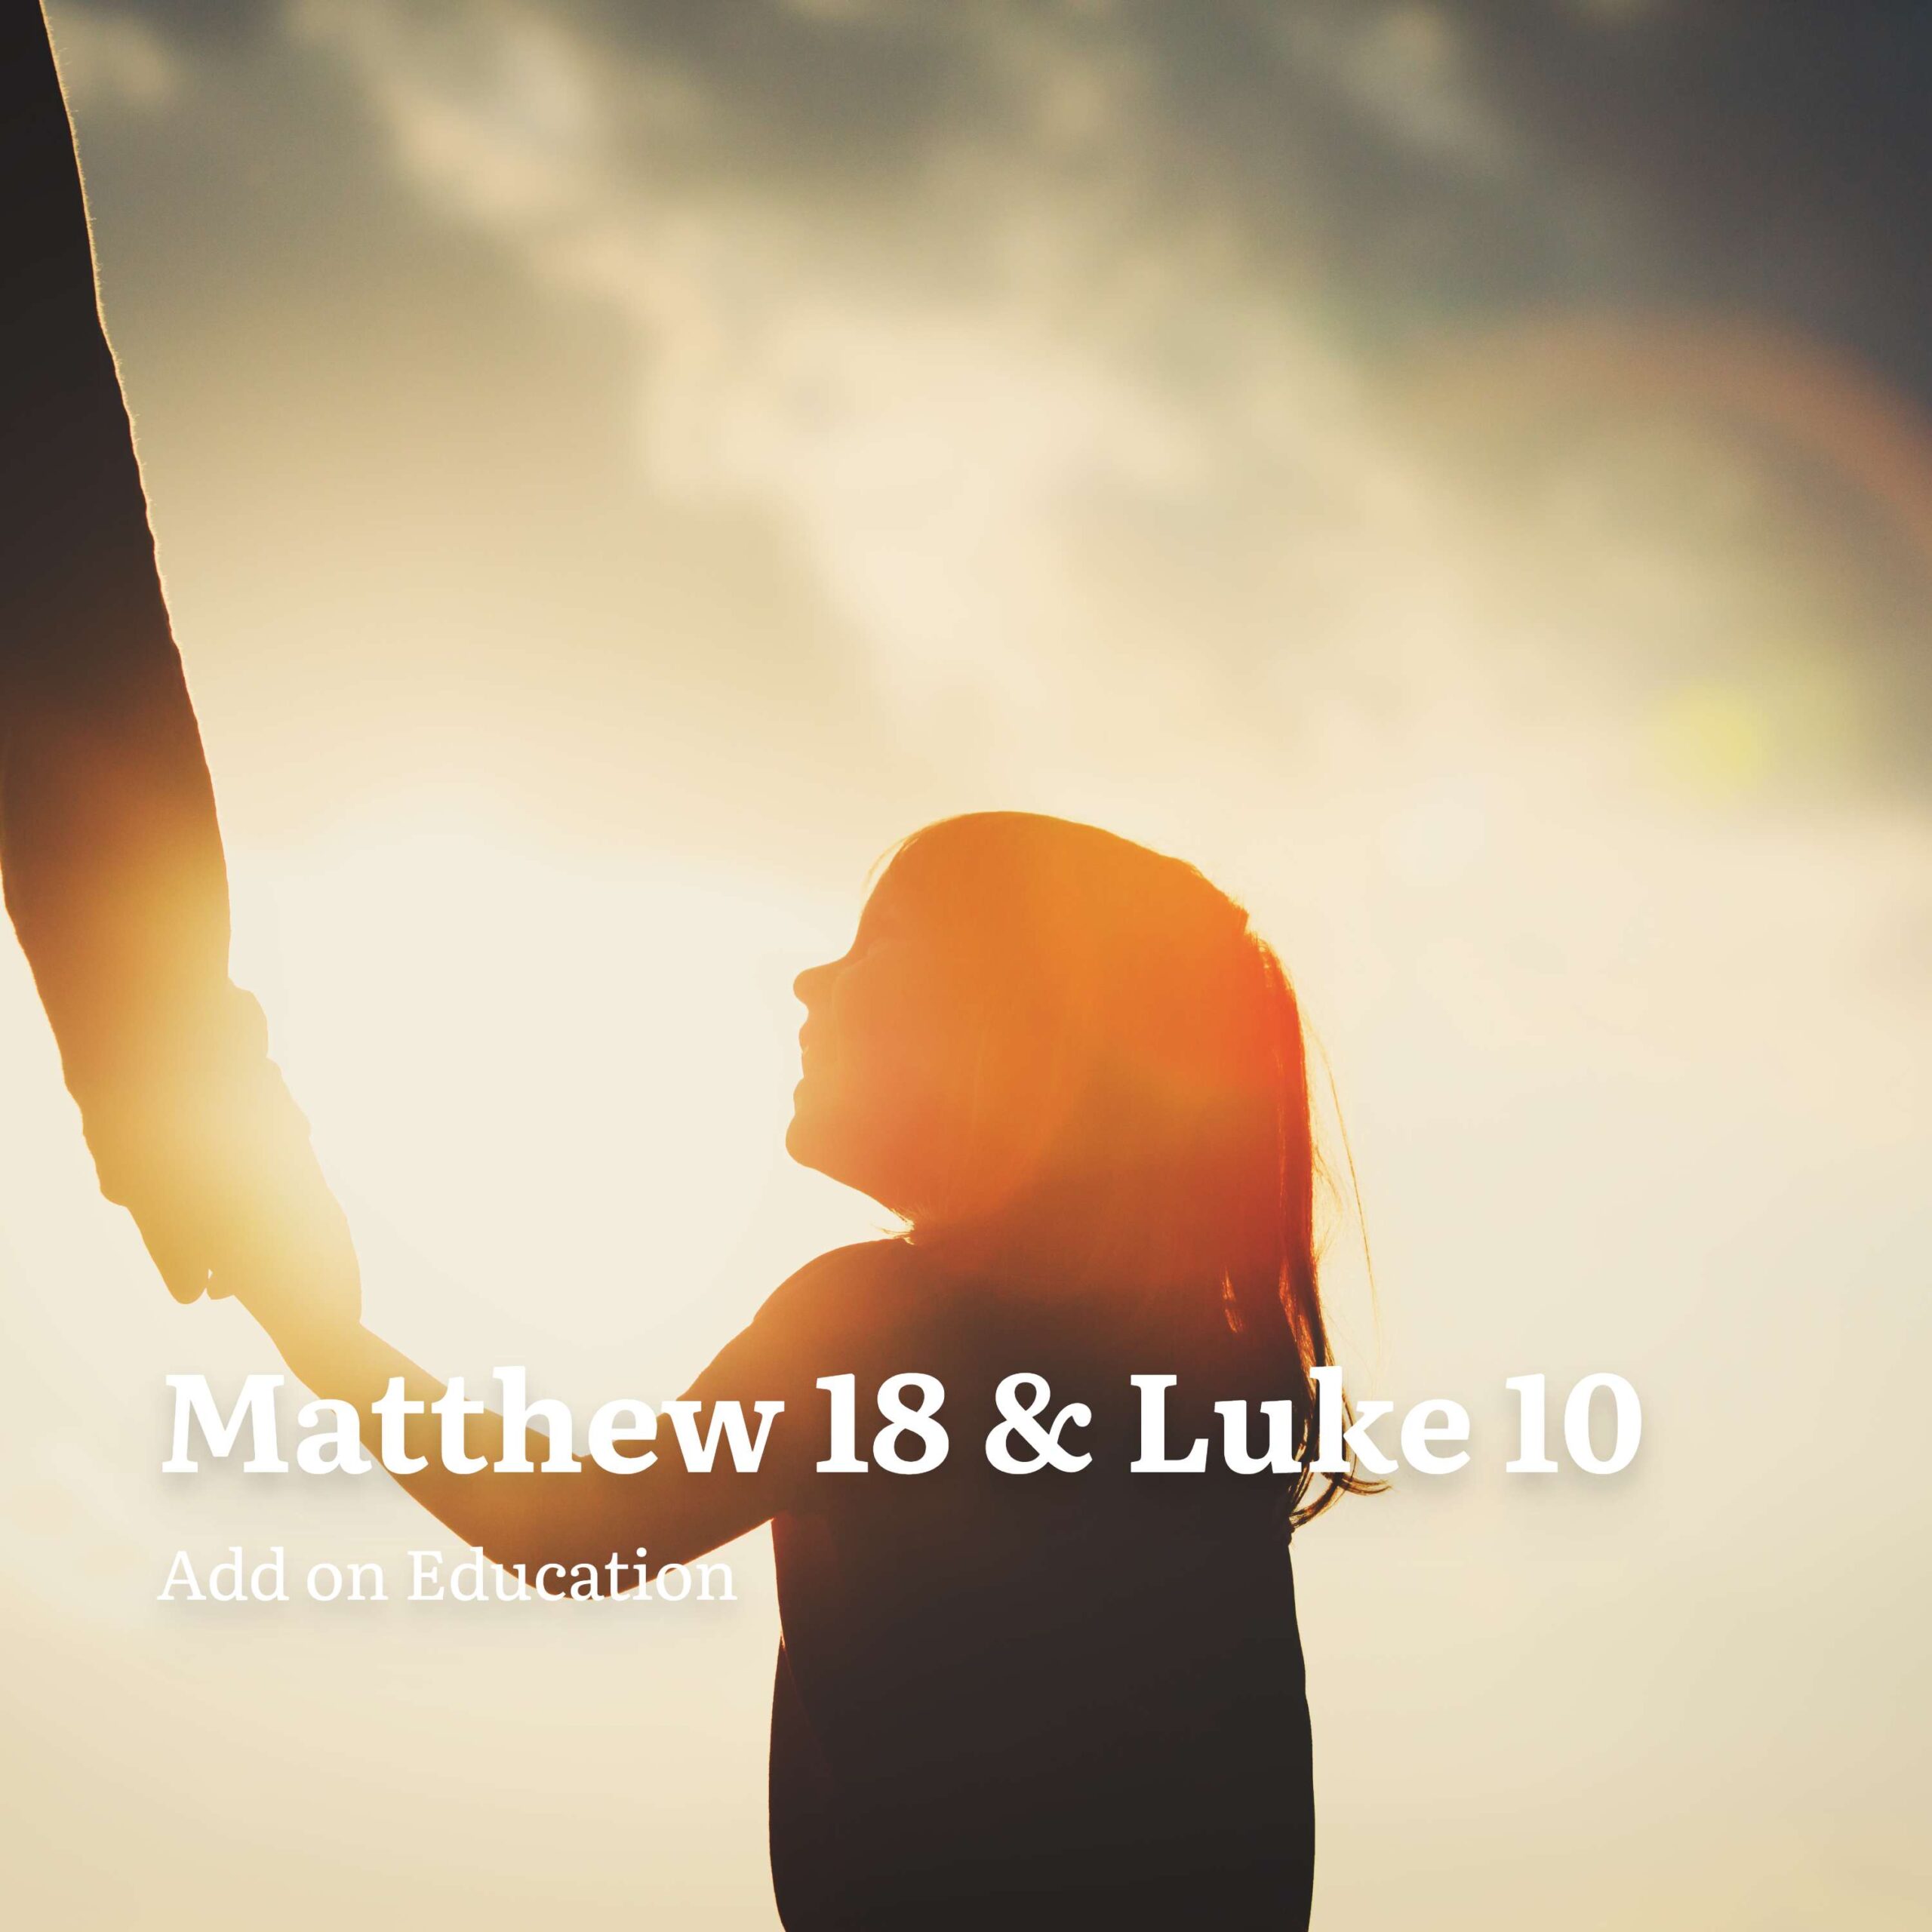 Matthew 18 & Luke 10